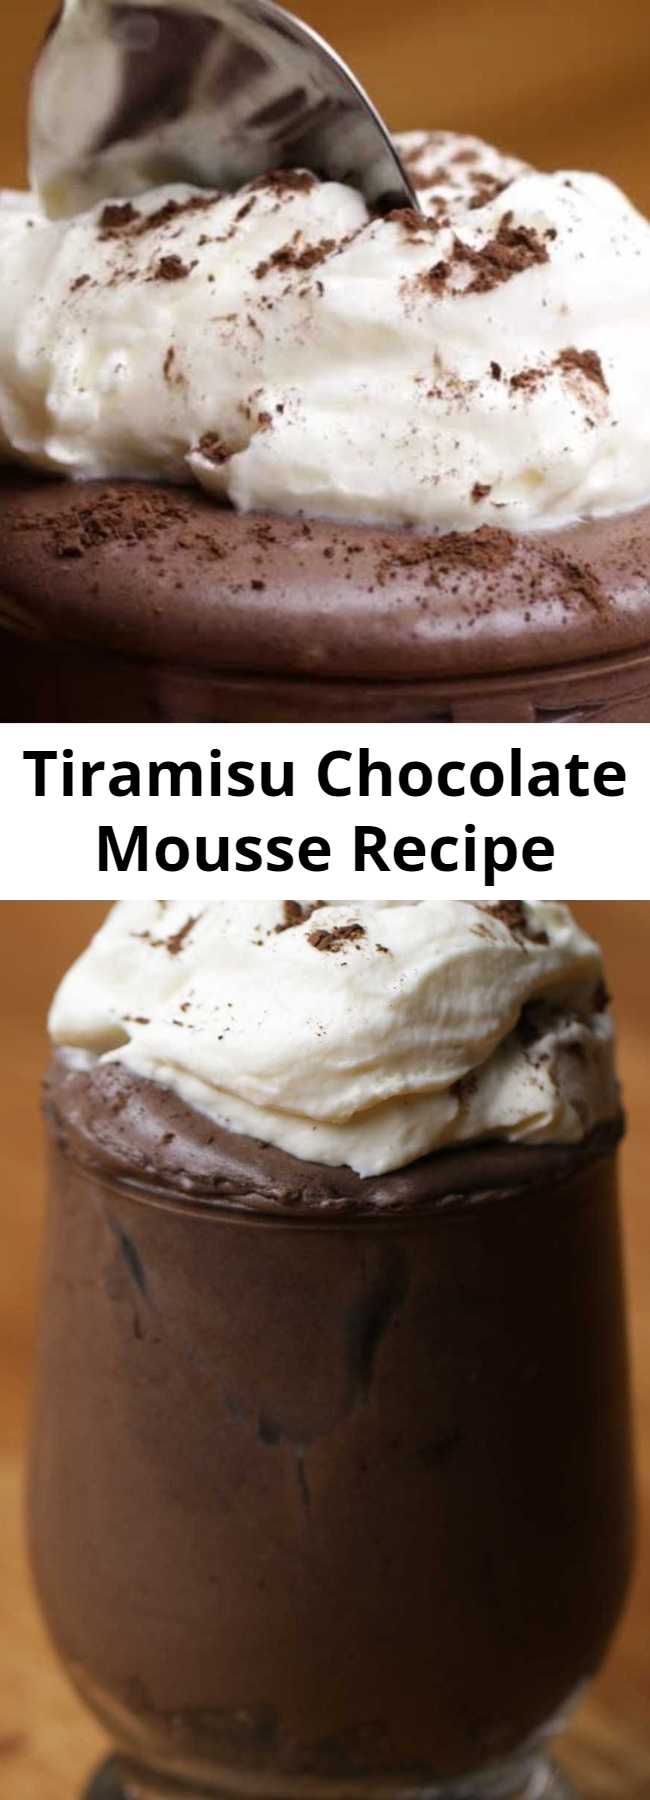 Tiramisu Chocolate Mousse Recipe - Savor your inner sweet tooth with this dreamy dessert.